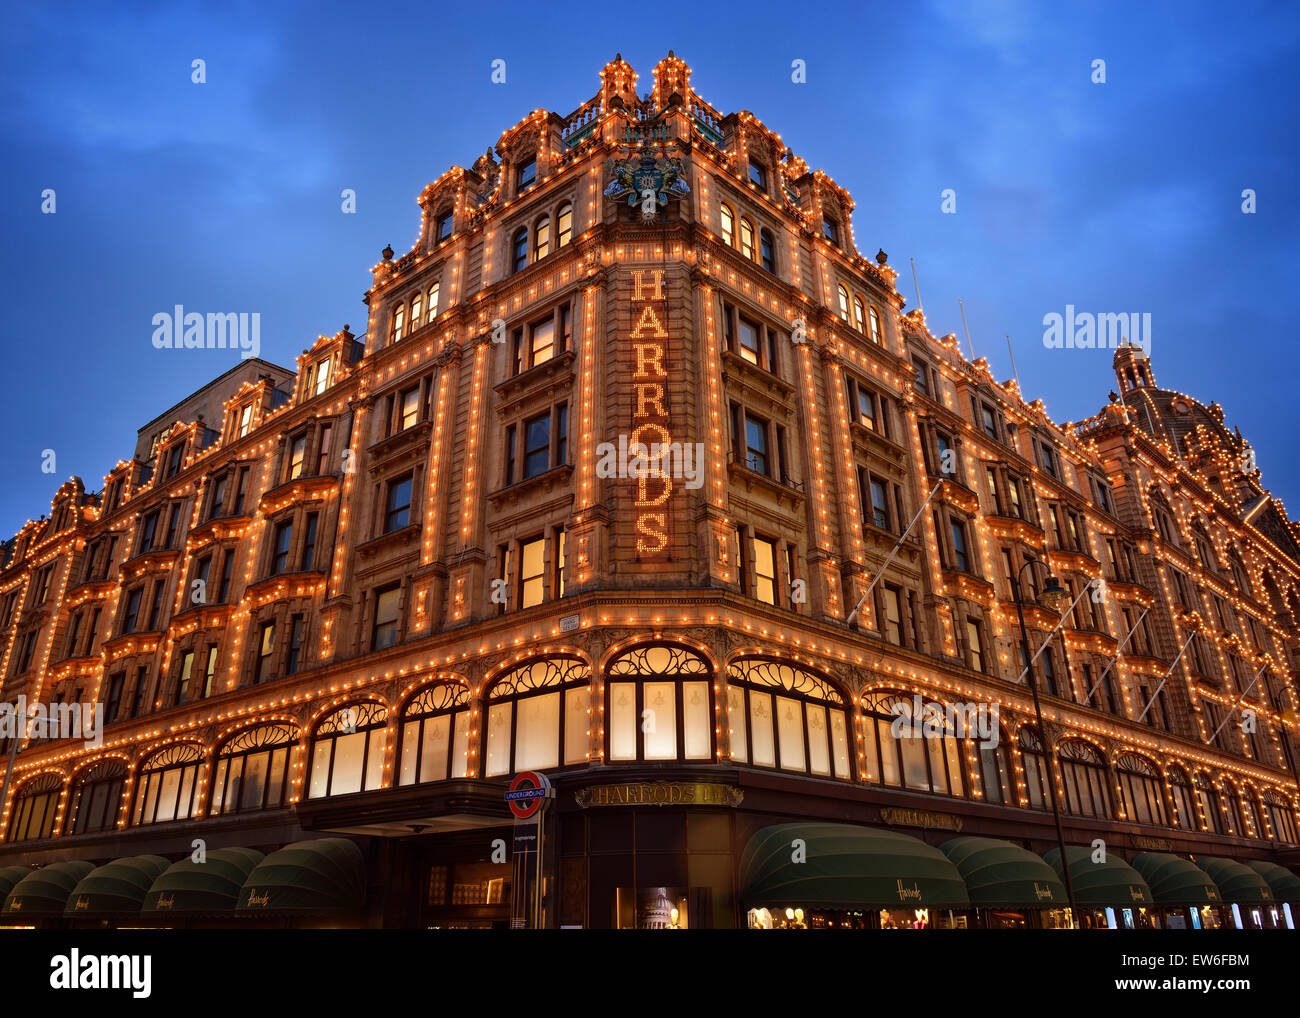 Harrods Department Store, Knightsbridge, London, UK. Stock Photo